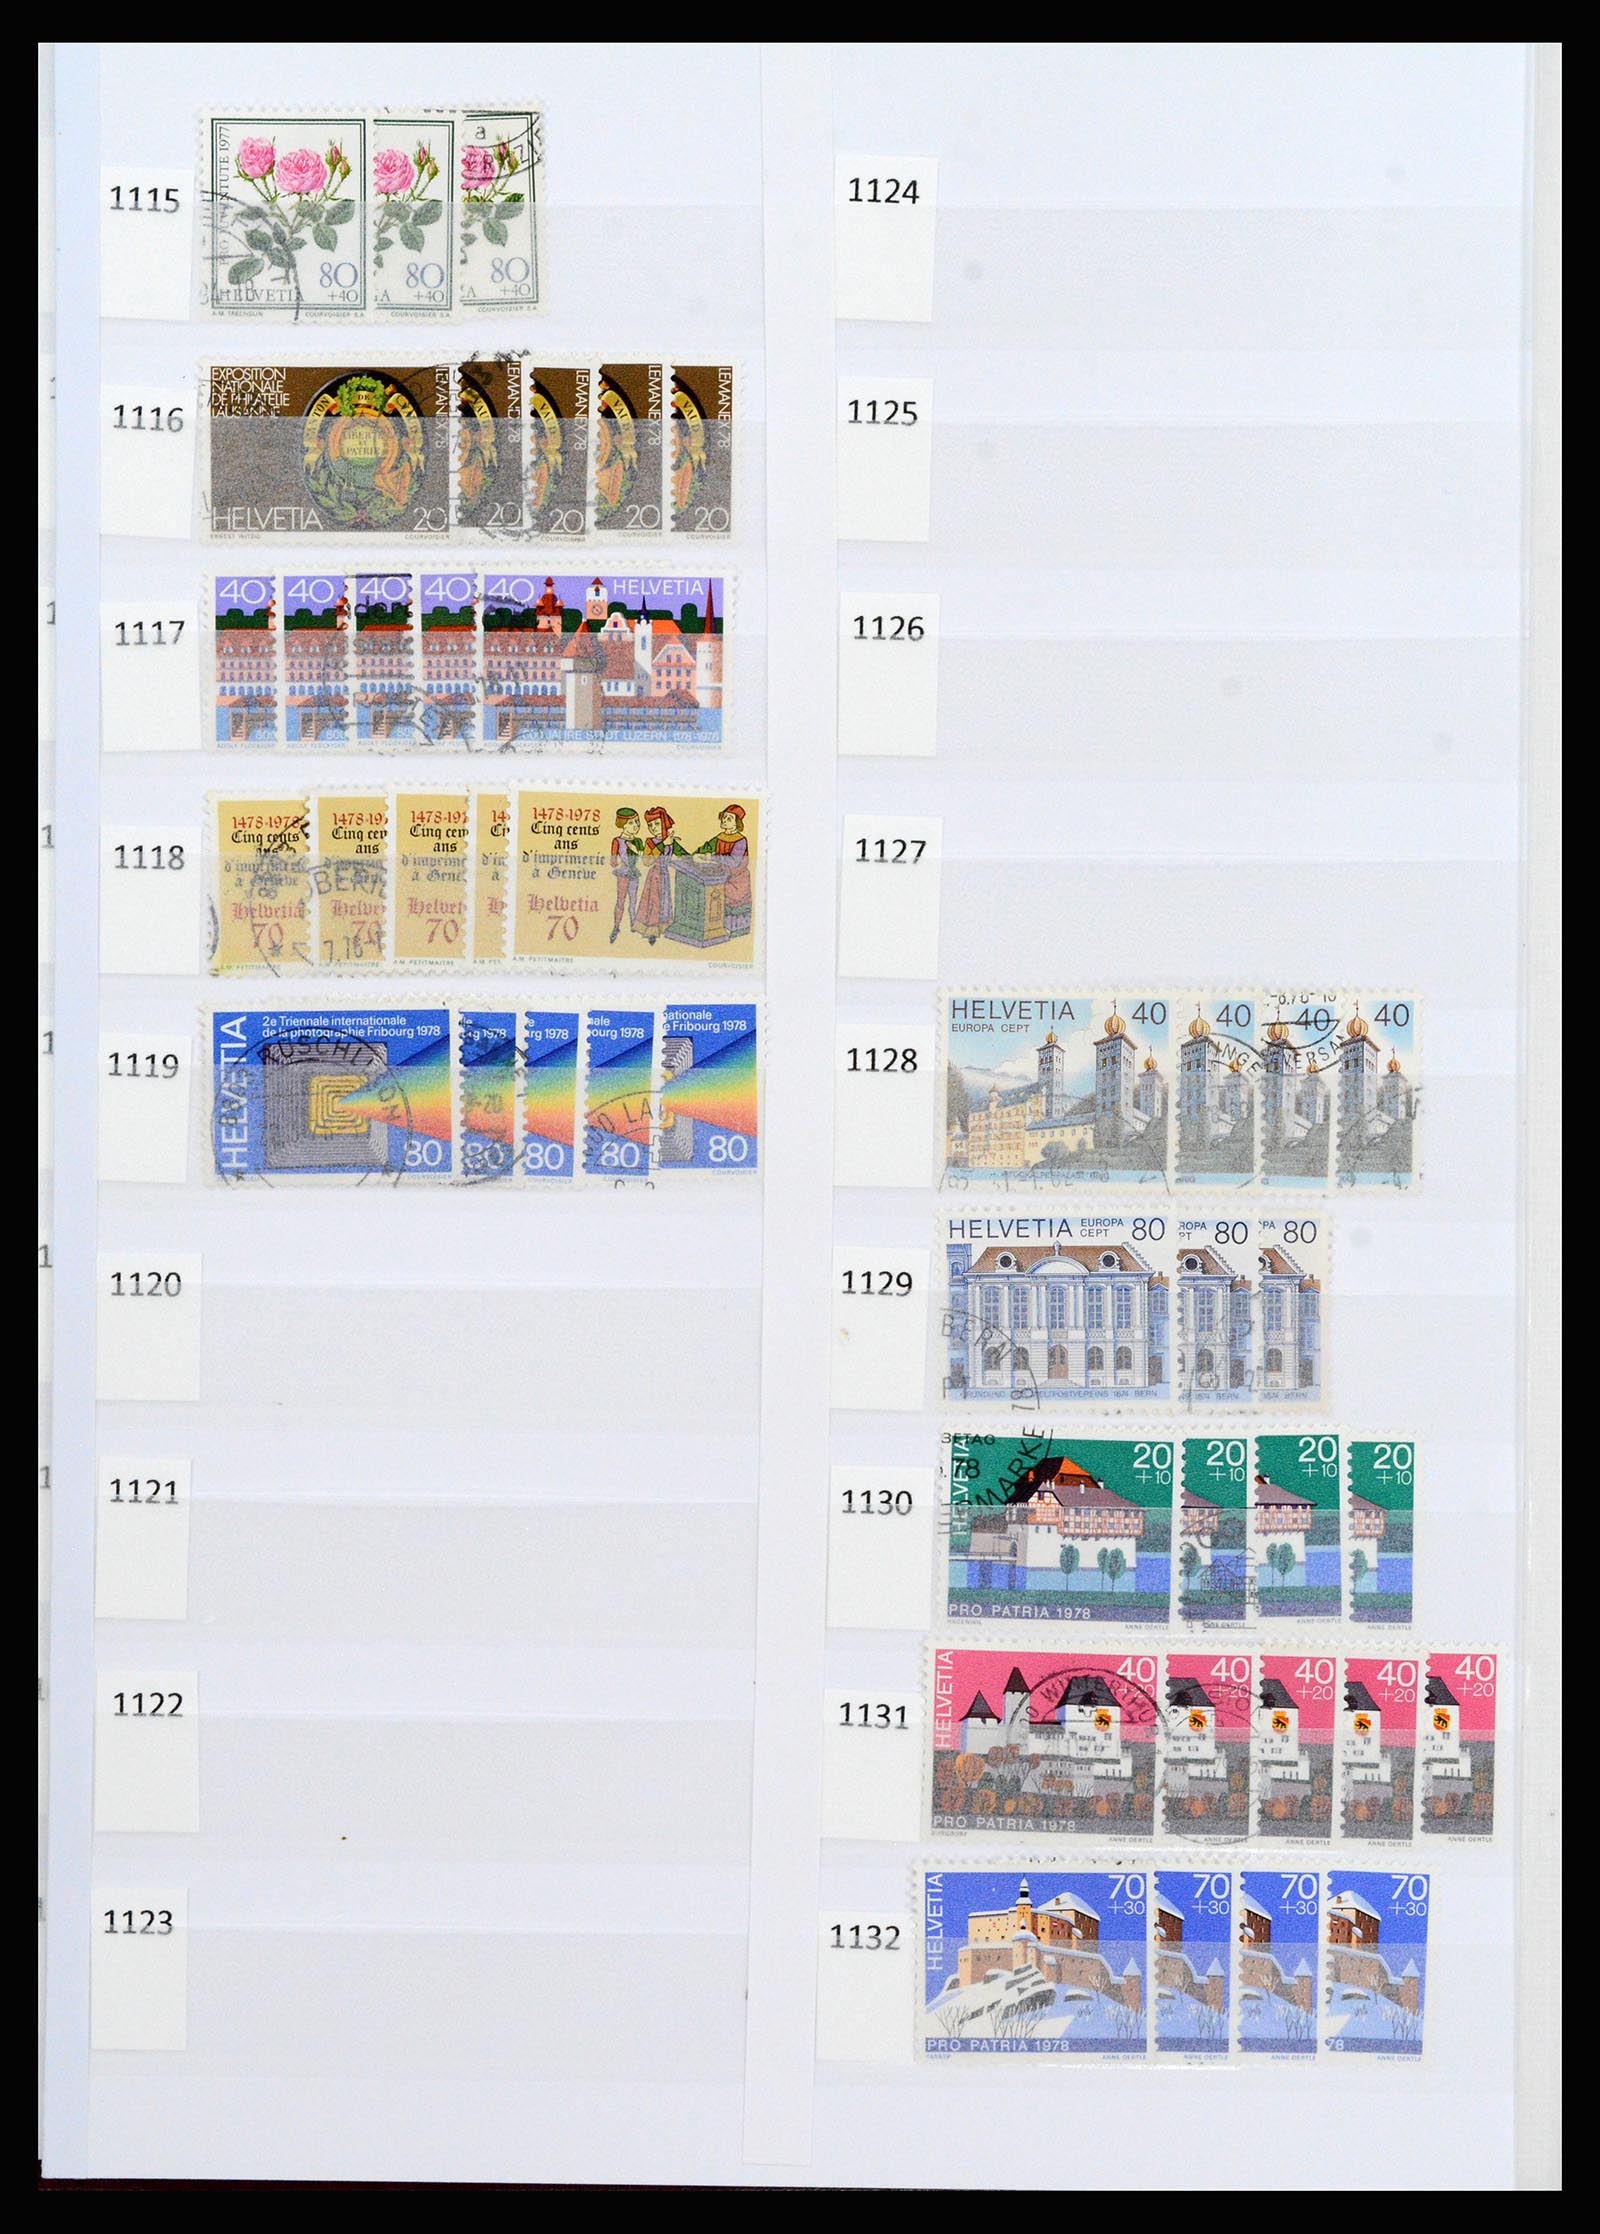 37252 063 - Stamp collection 37252 Switzerland 1900-2011.